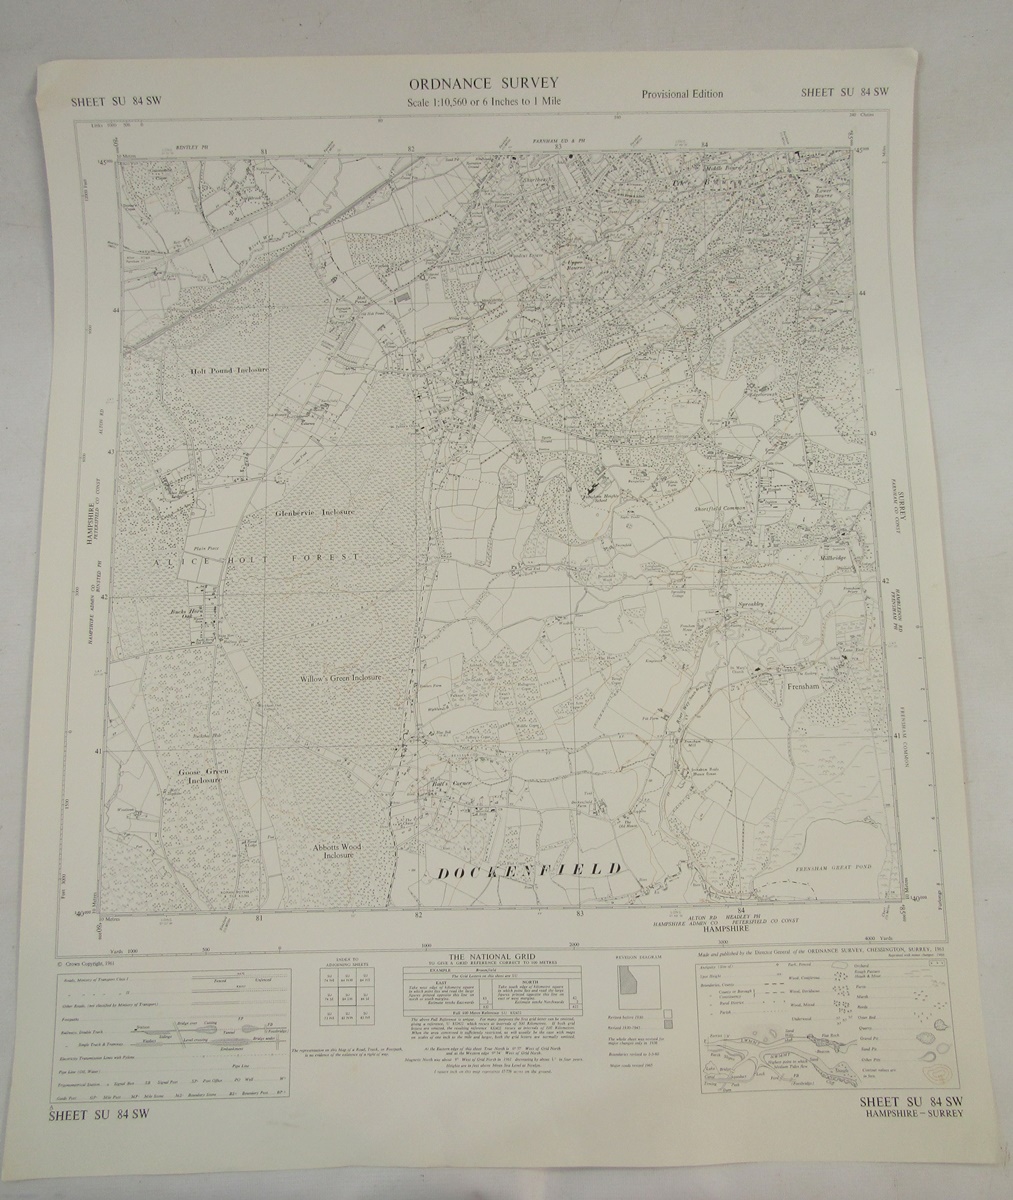 Four ordnance survey maps of Surrey: Lower Bourne, Surrey, Surrey Dockenfield, Peper Harrow, Kent - Image 4 of 8